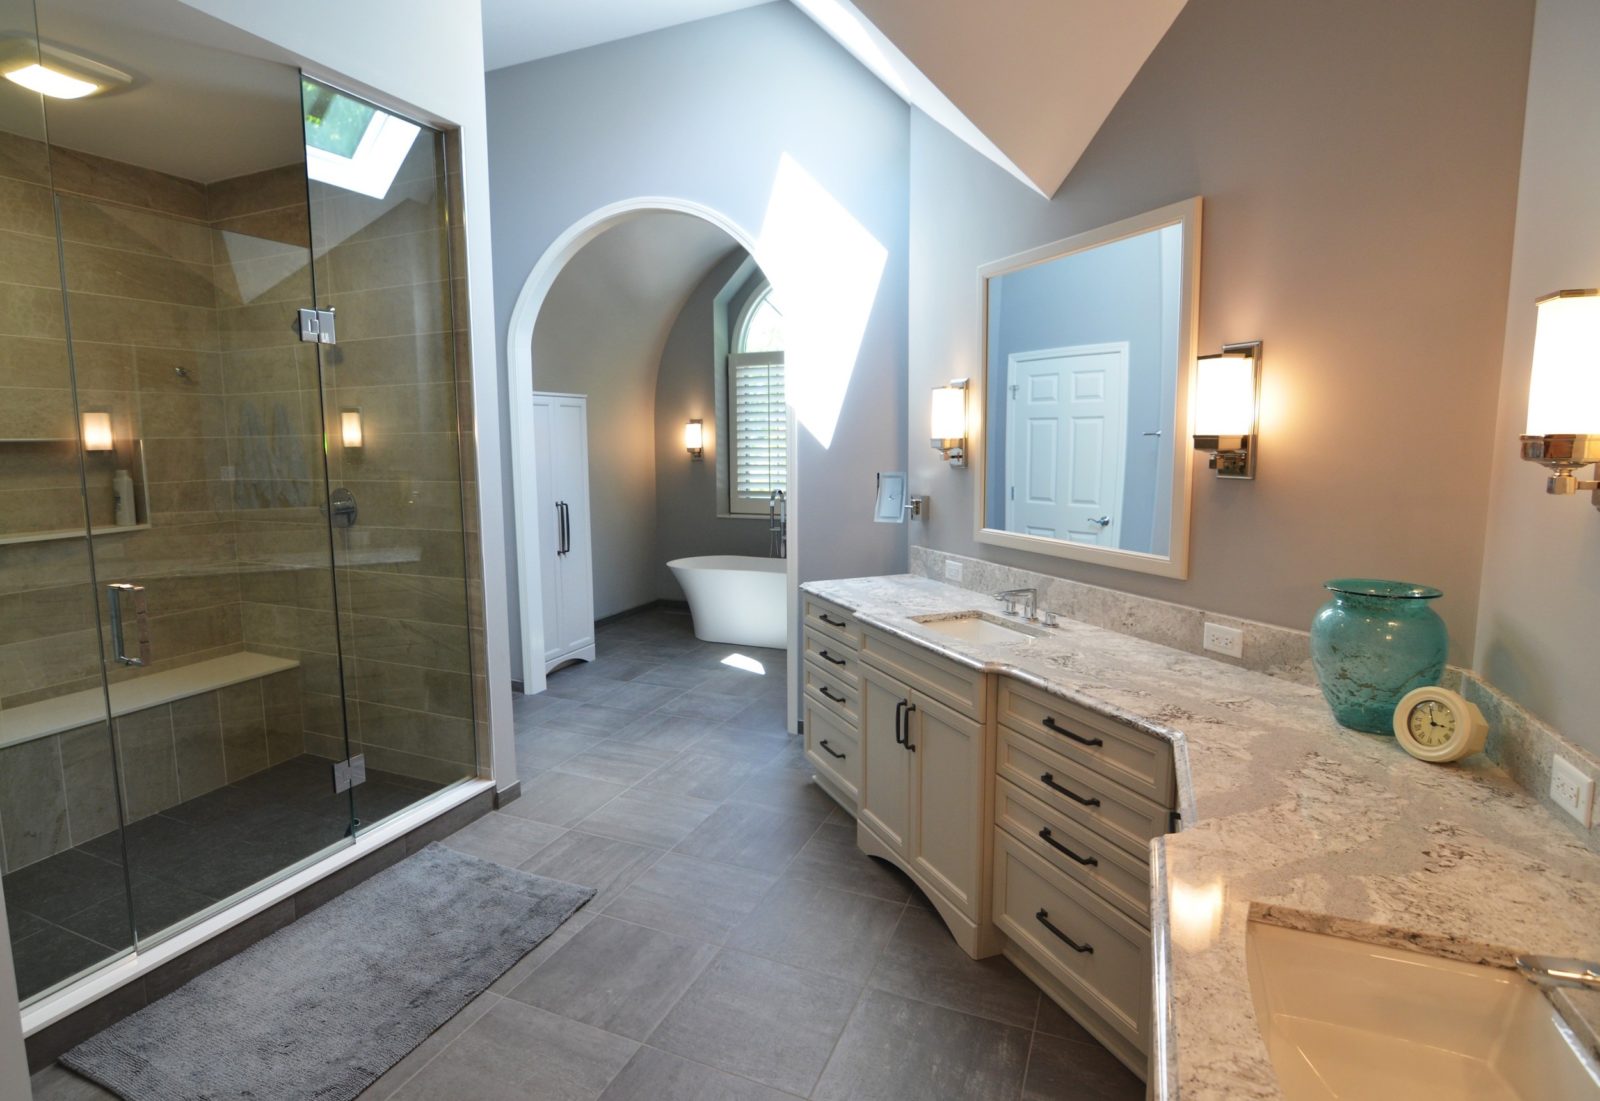 10 Beautiful Bathroom Ideas That Create a Cozy Atmosphere